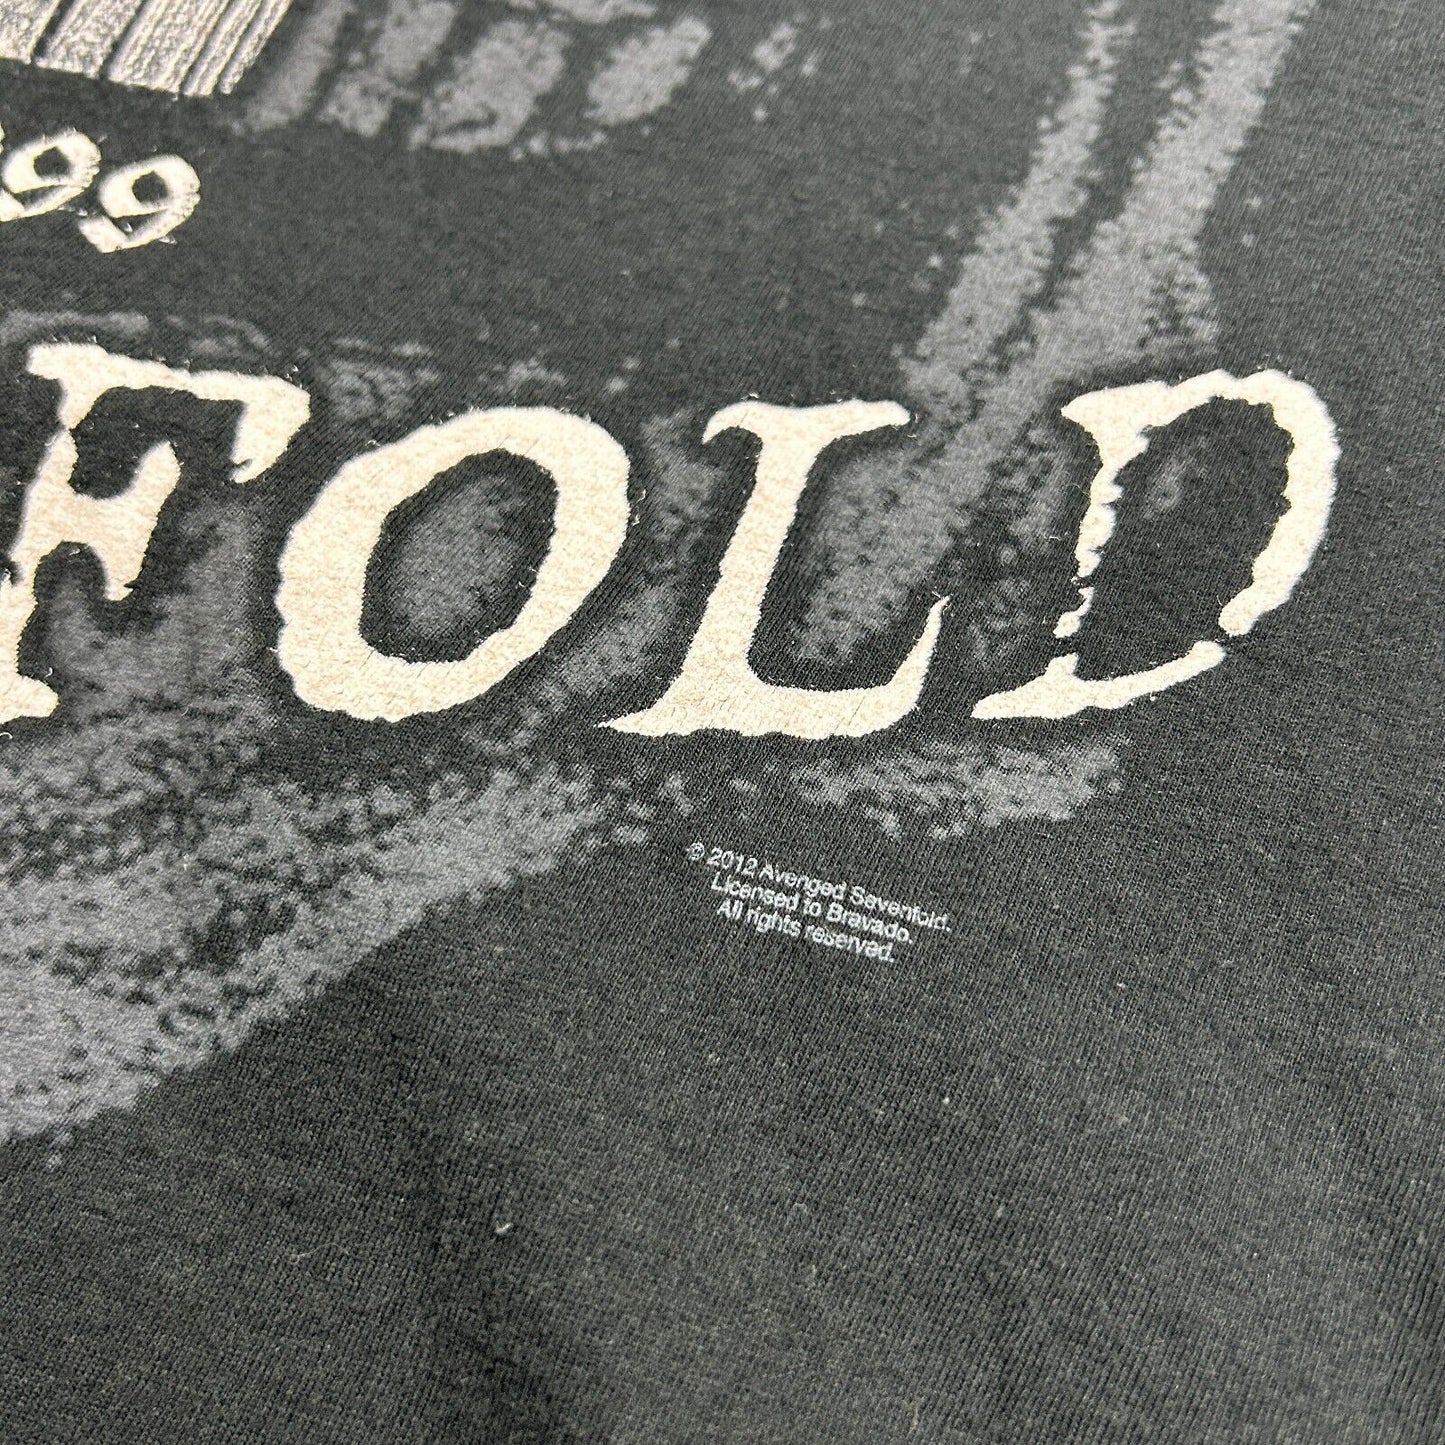 AVENGED SEVENFOLD Metal Black Band T-Shirt sz M Adult